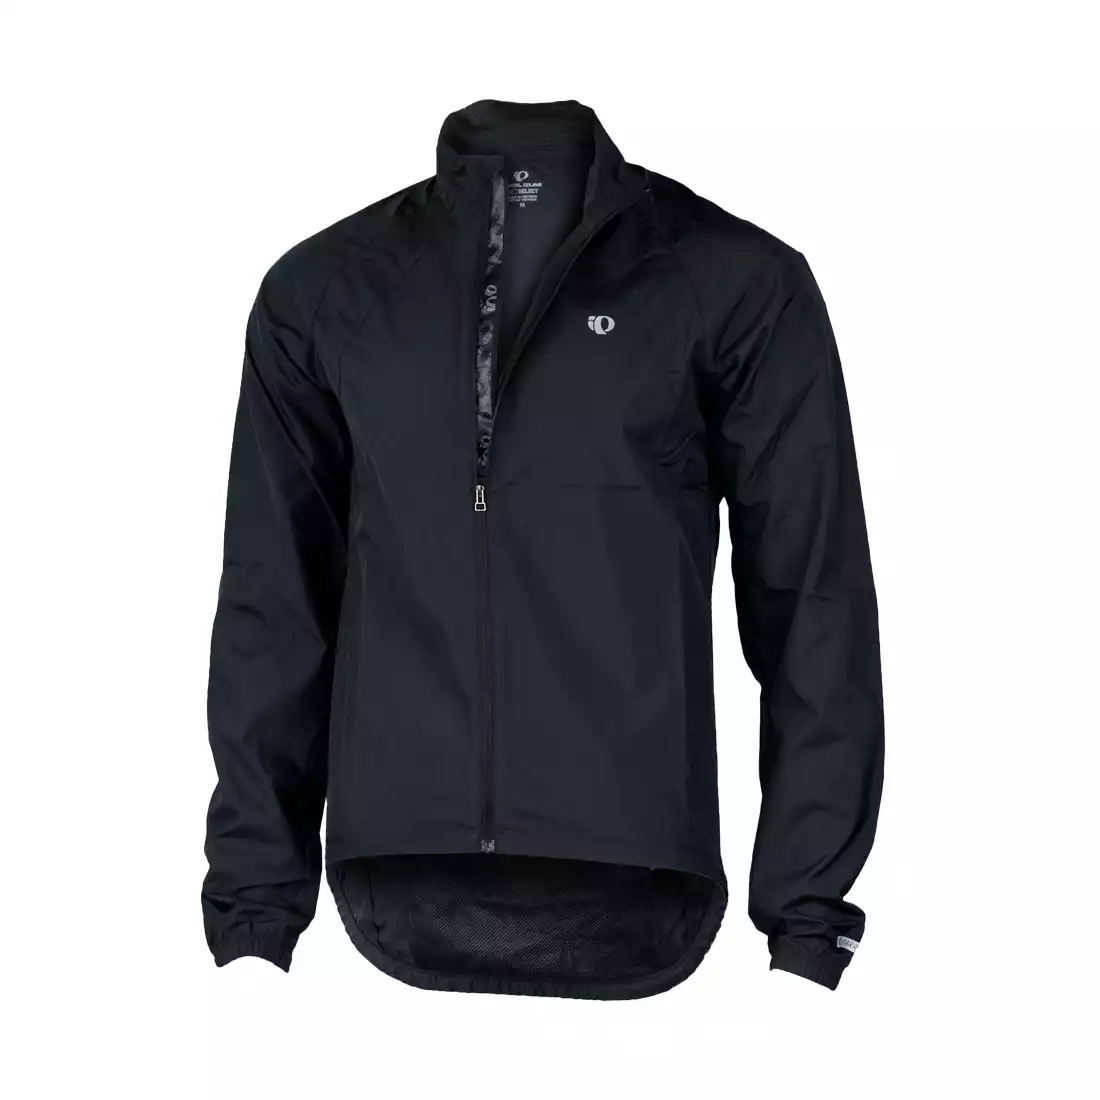 PEARL IZUMI - SELECT Barrier Jacket 11131335-021 - męska kurtka rowerowa - kolor: Czarny